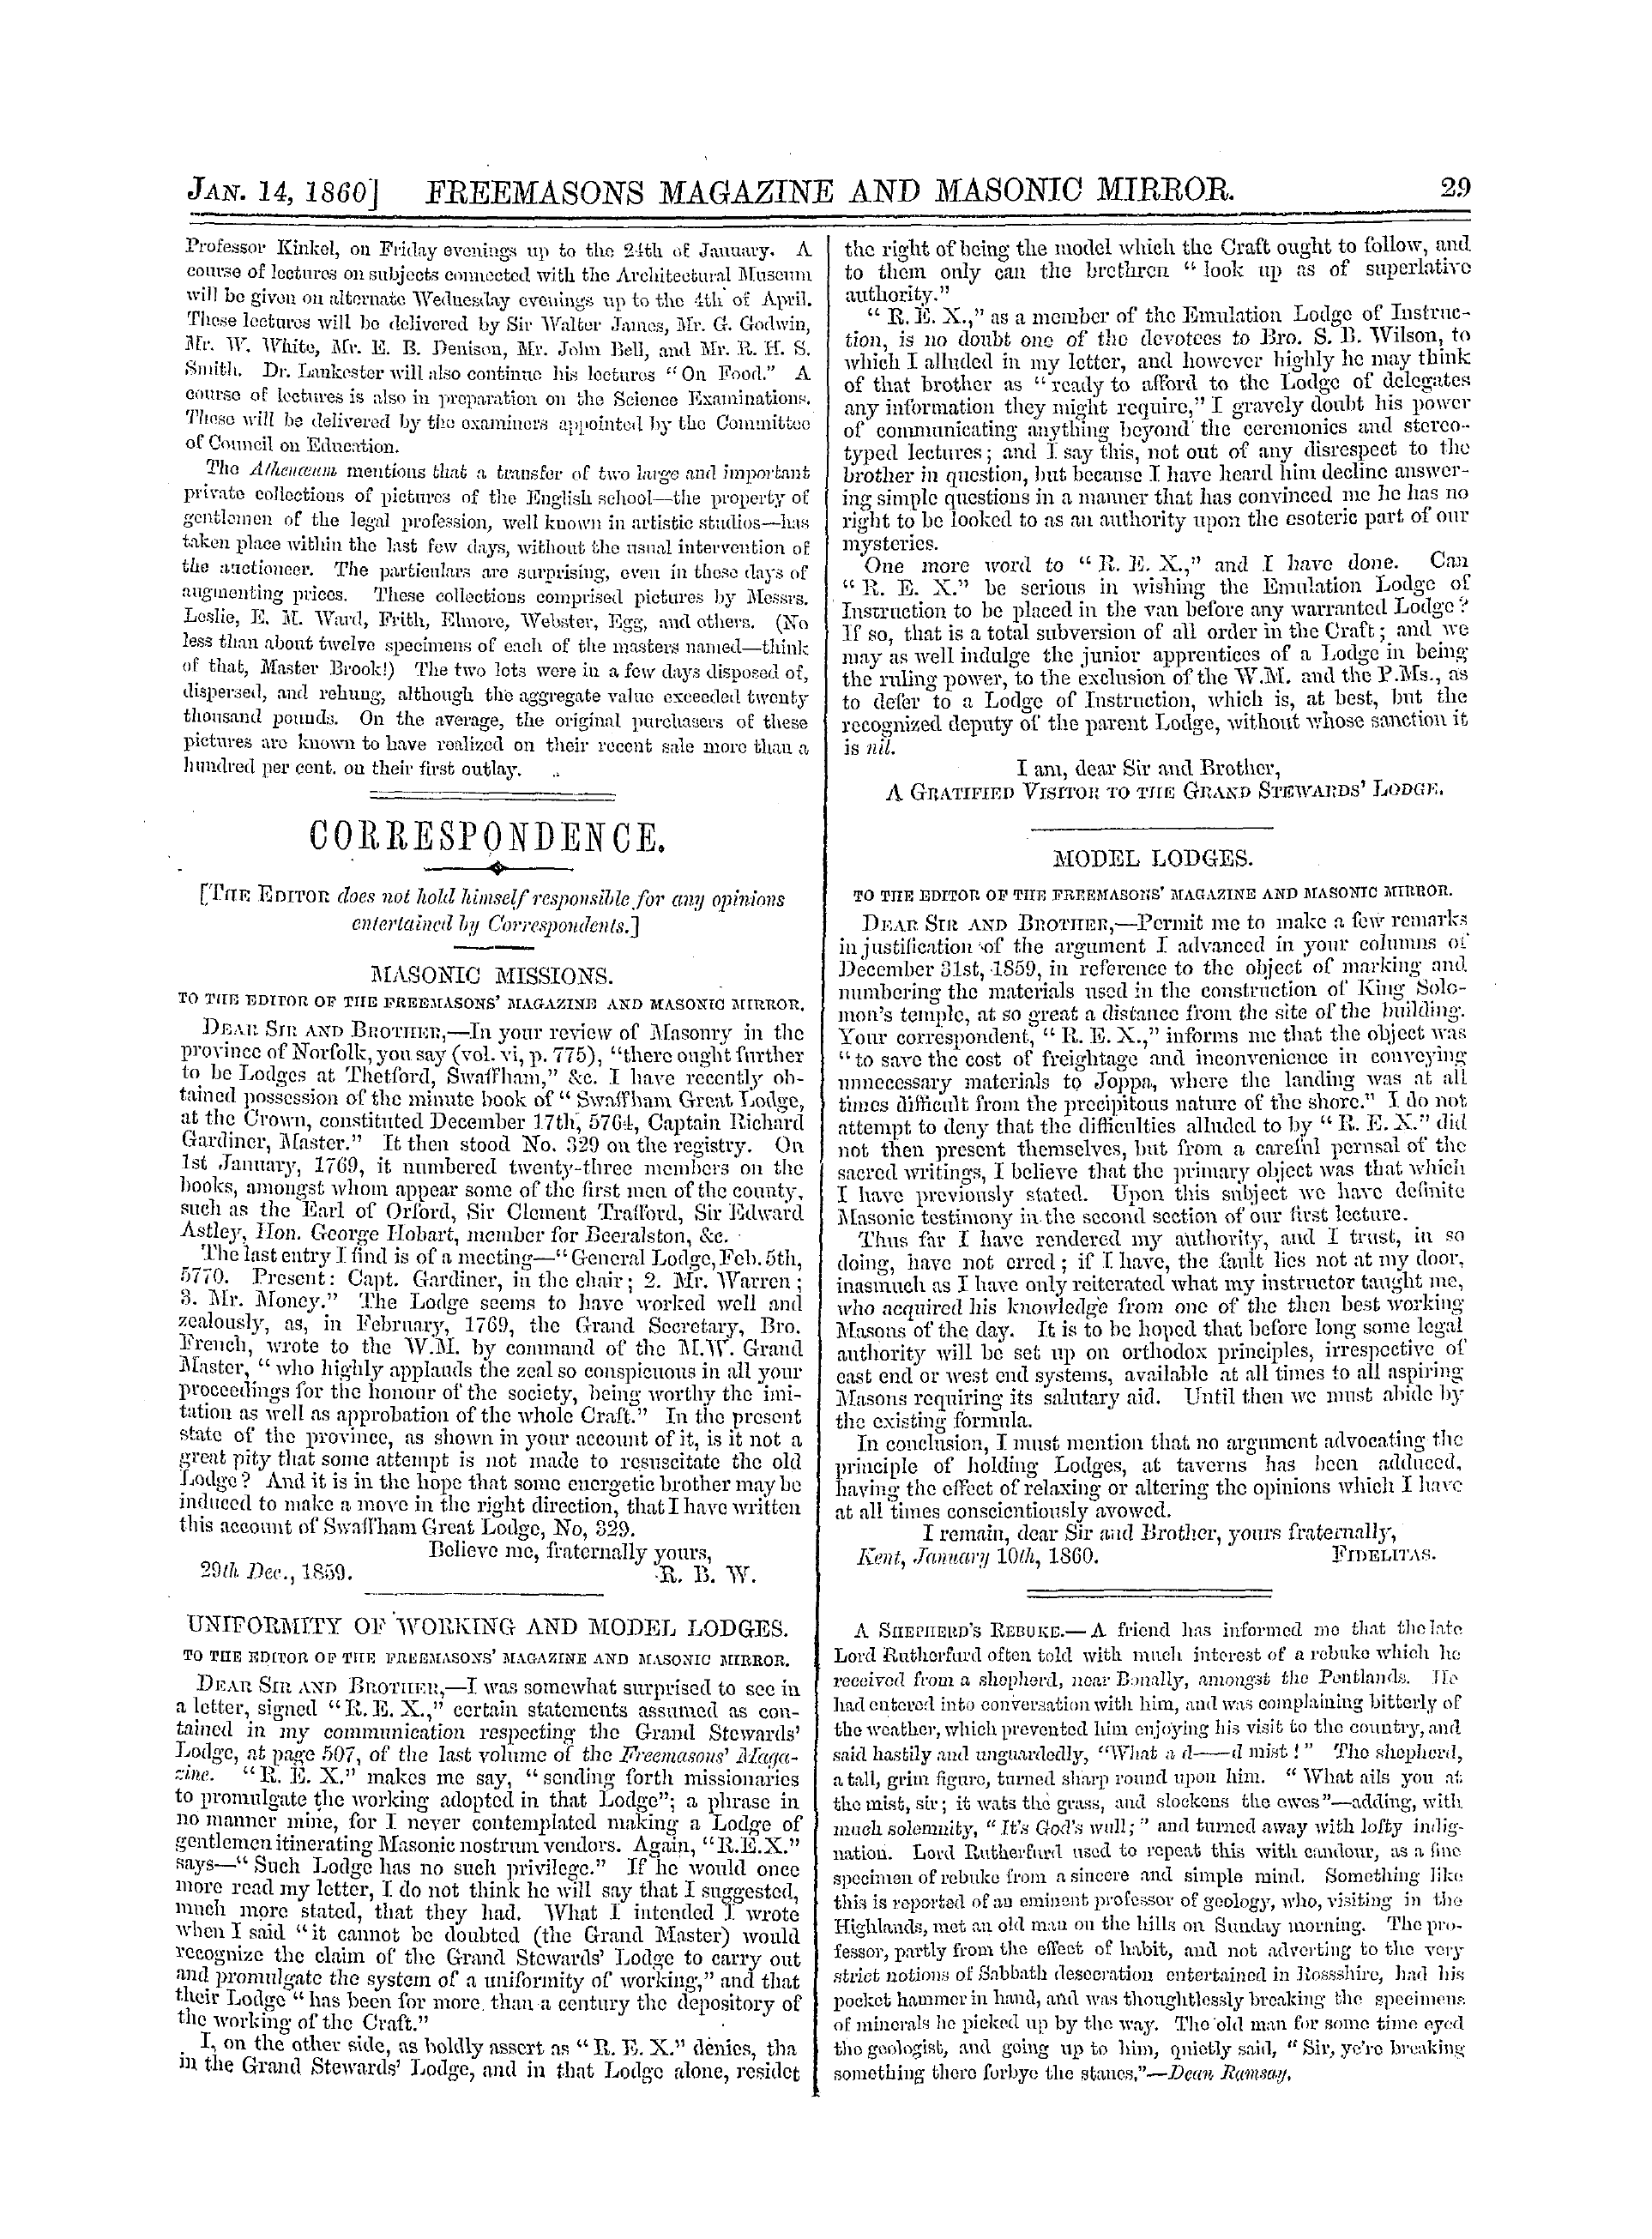 The Freemasons' Monthly Magazine: 1860-01-14 - Literature.